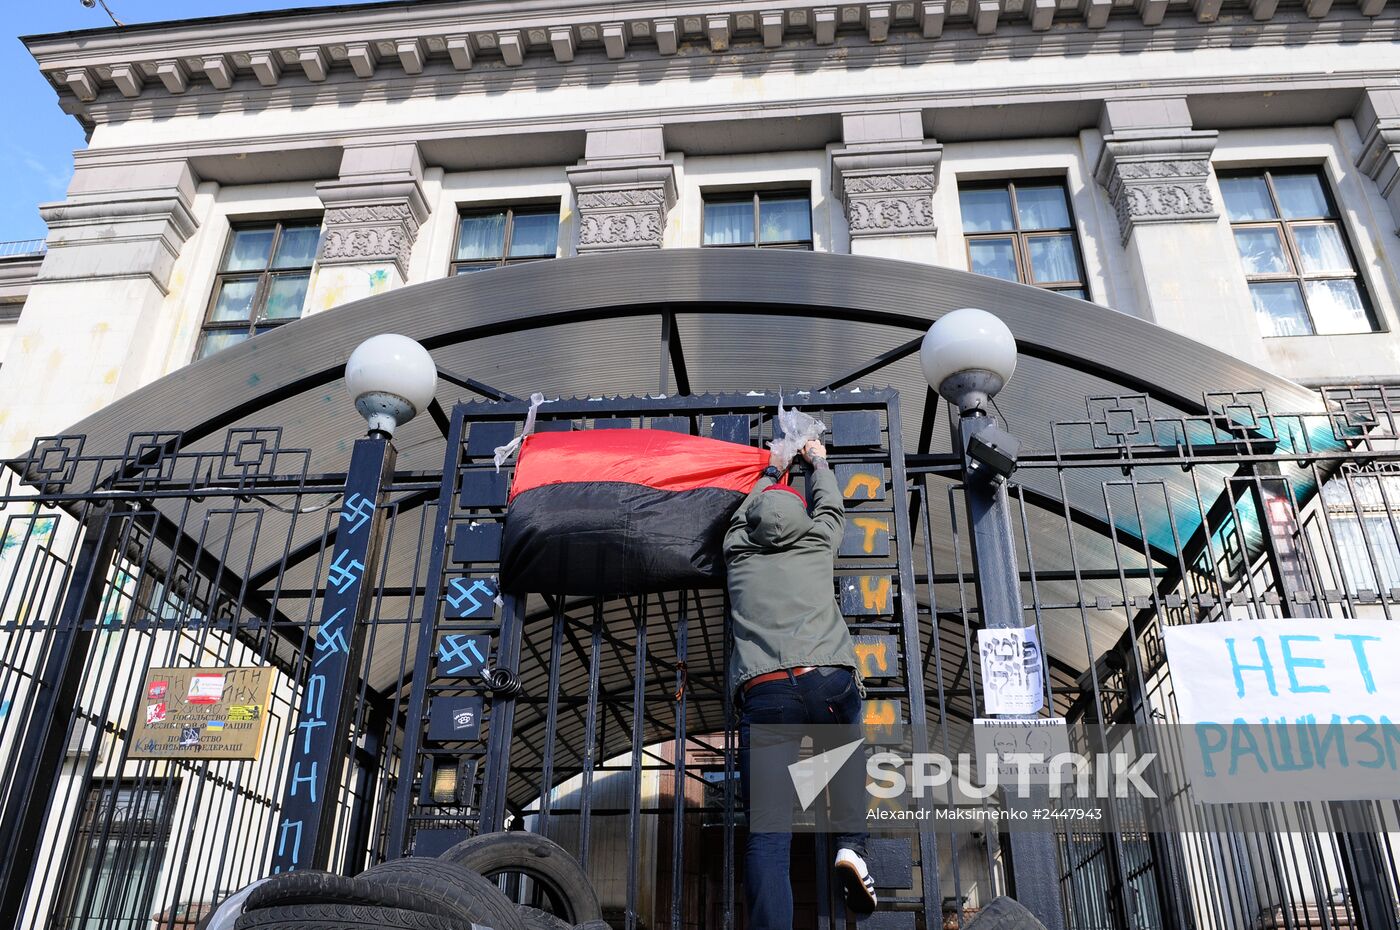 Unrest at Russian Embassy in Kiev